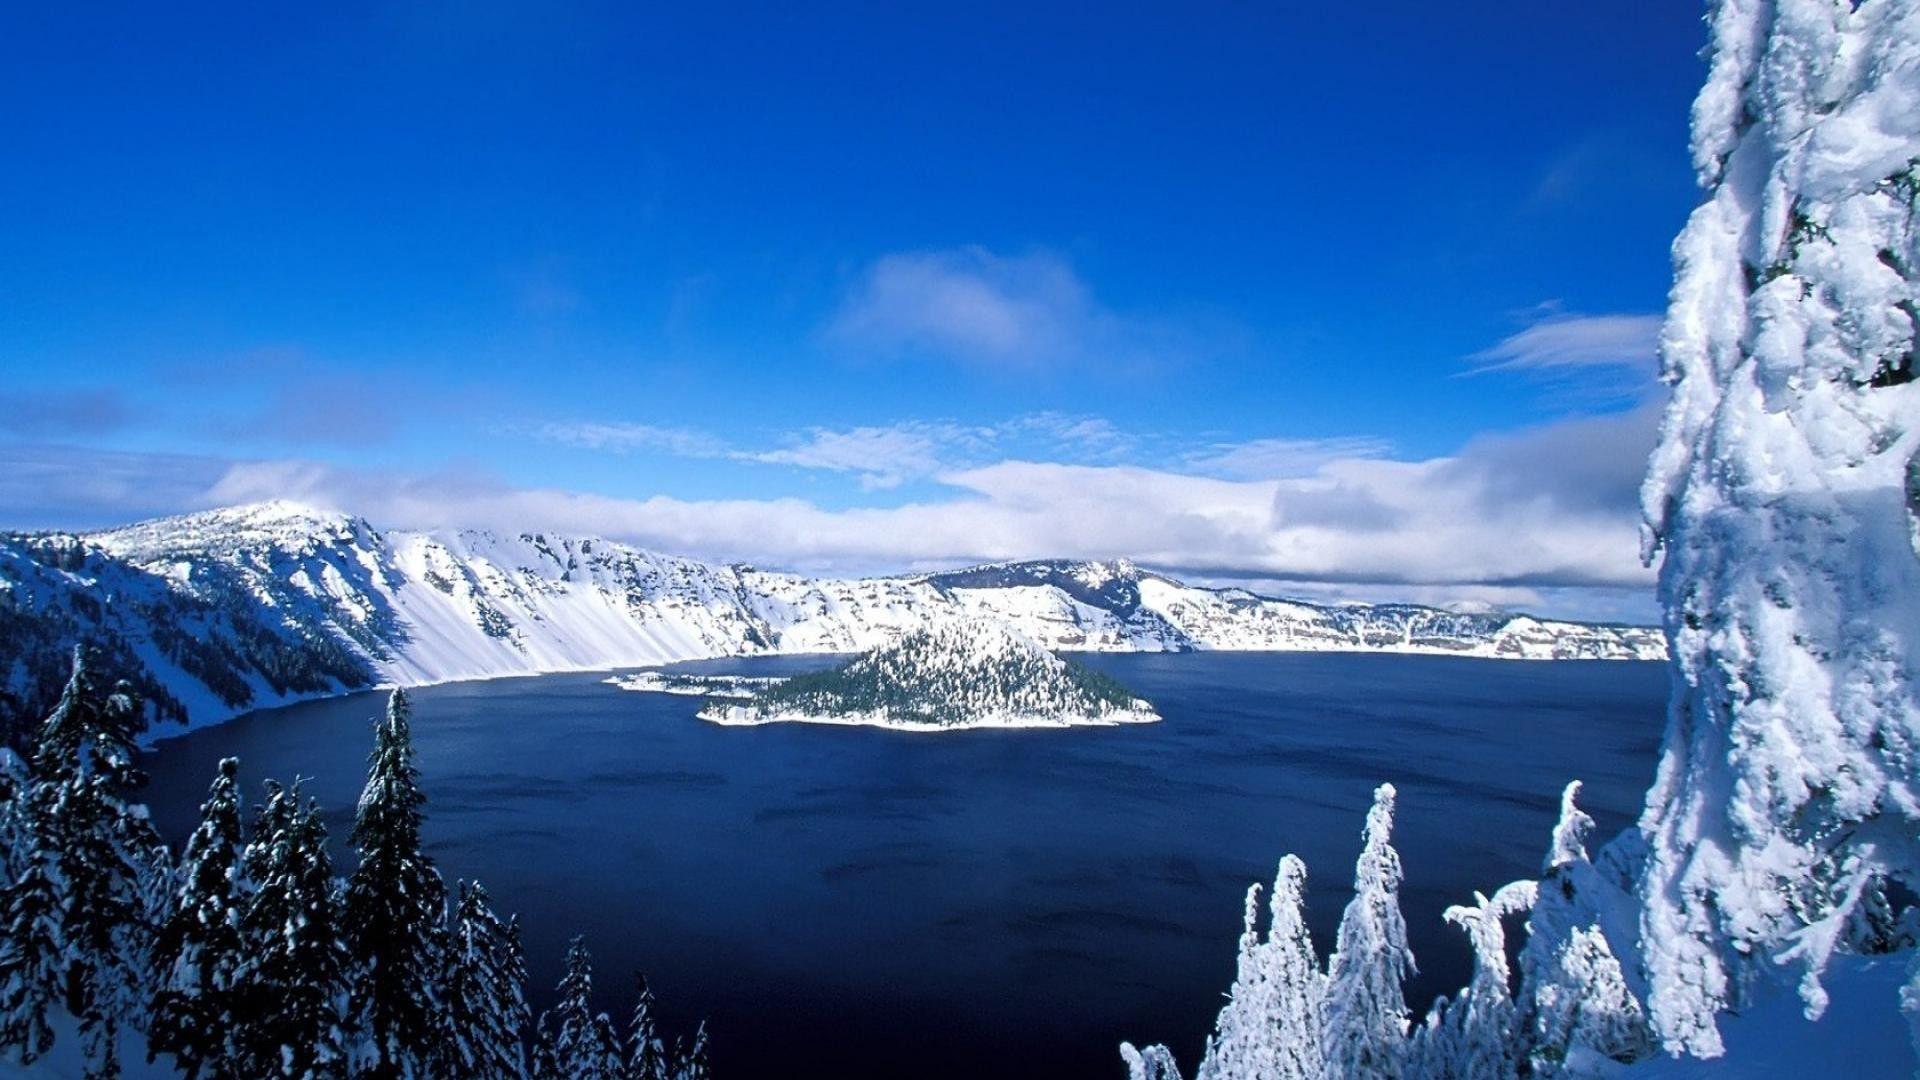 Frozen Tag wallpaper: Mountain Nature Winter Landscapes Snow